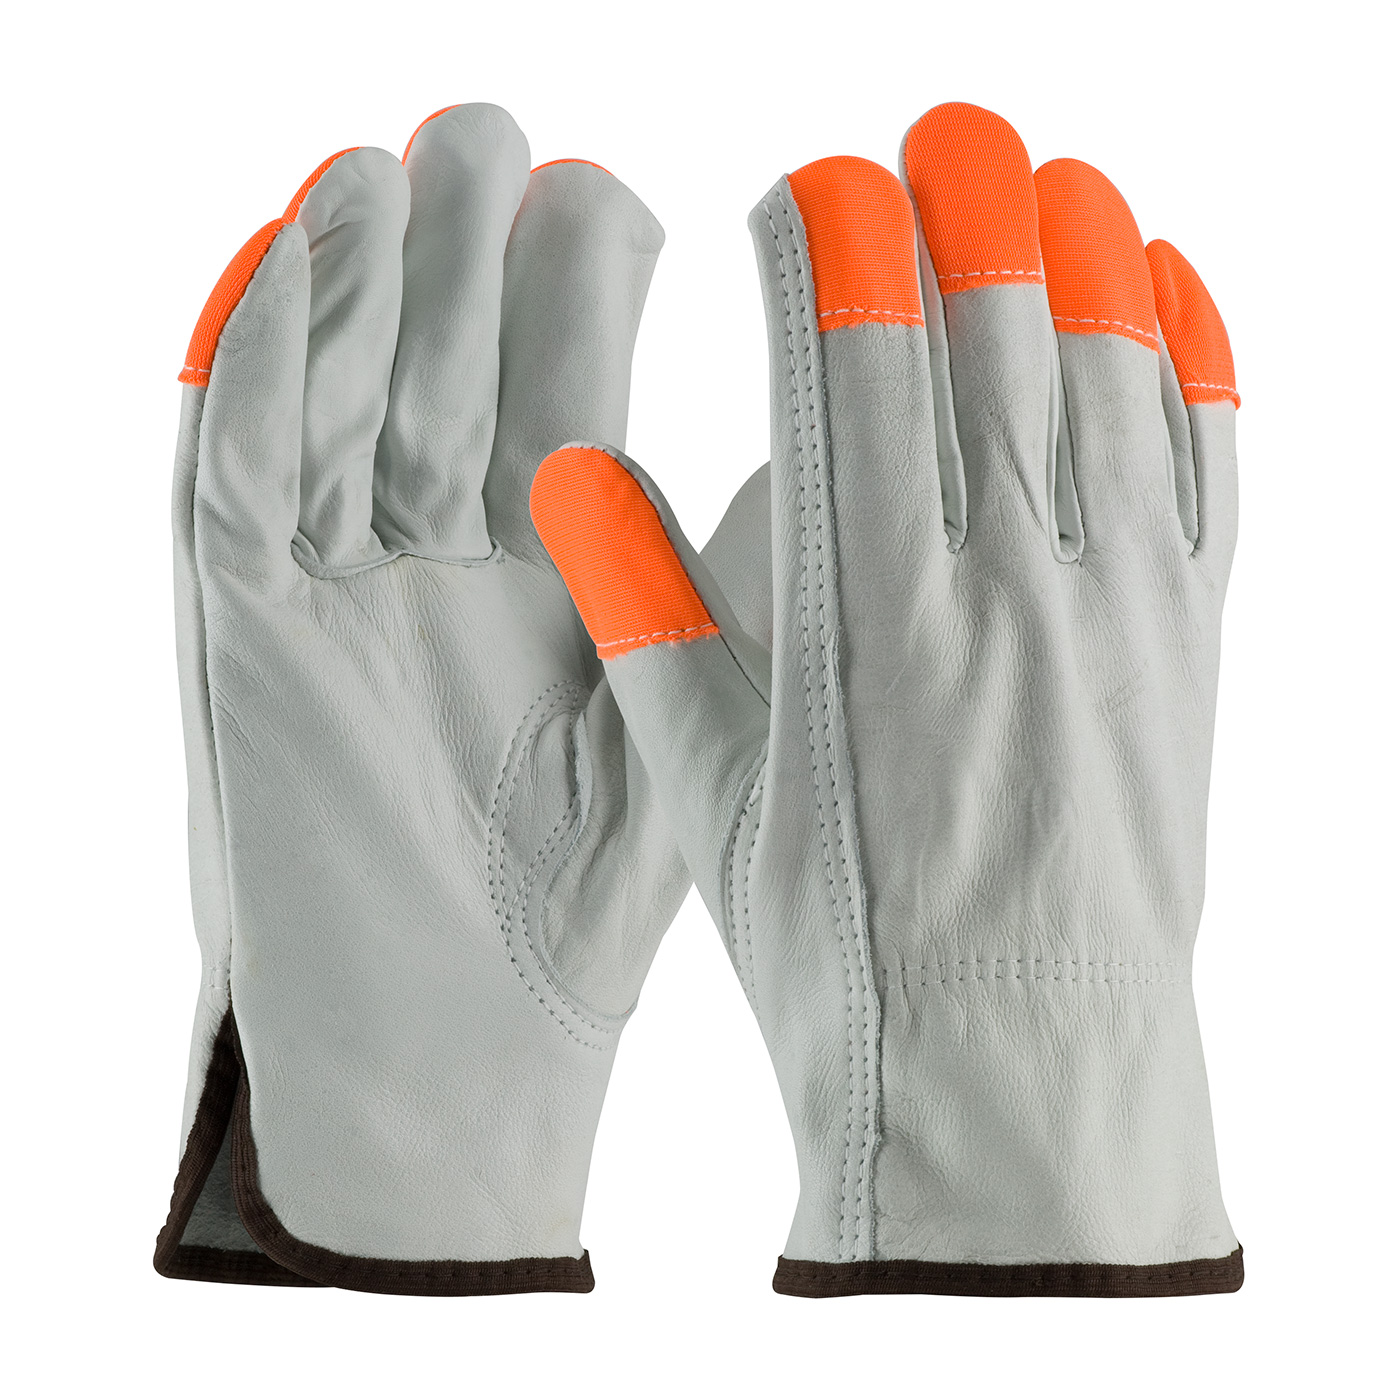 PIP 68-163HV/L Regular Grade Top Grain Cowhide Leather Drivers Glove with Hi-Vis Fingertips - Keystone Thumb - Large PID-68 163HV L